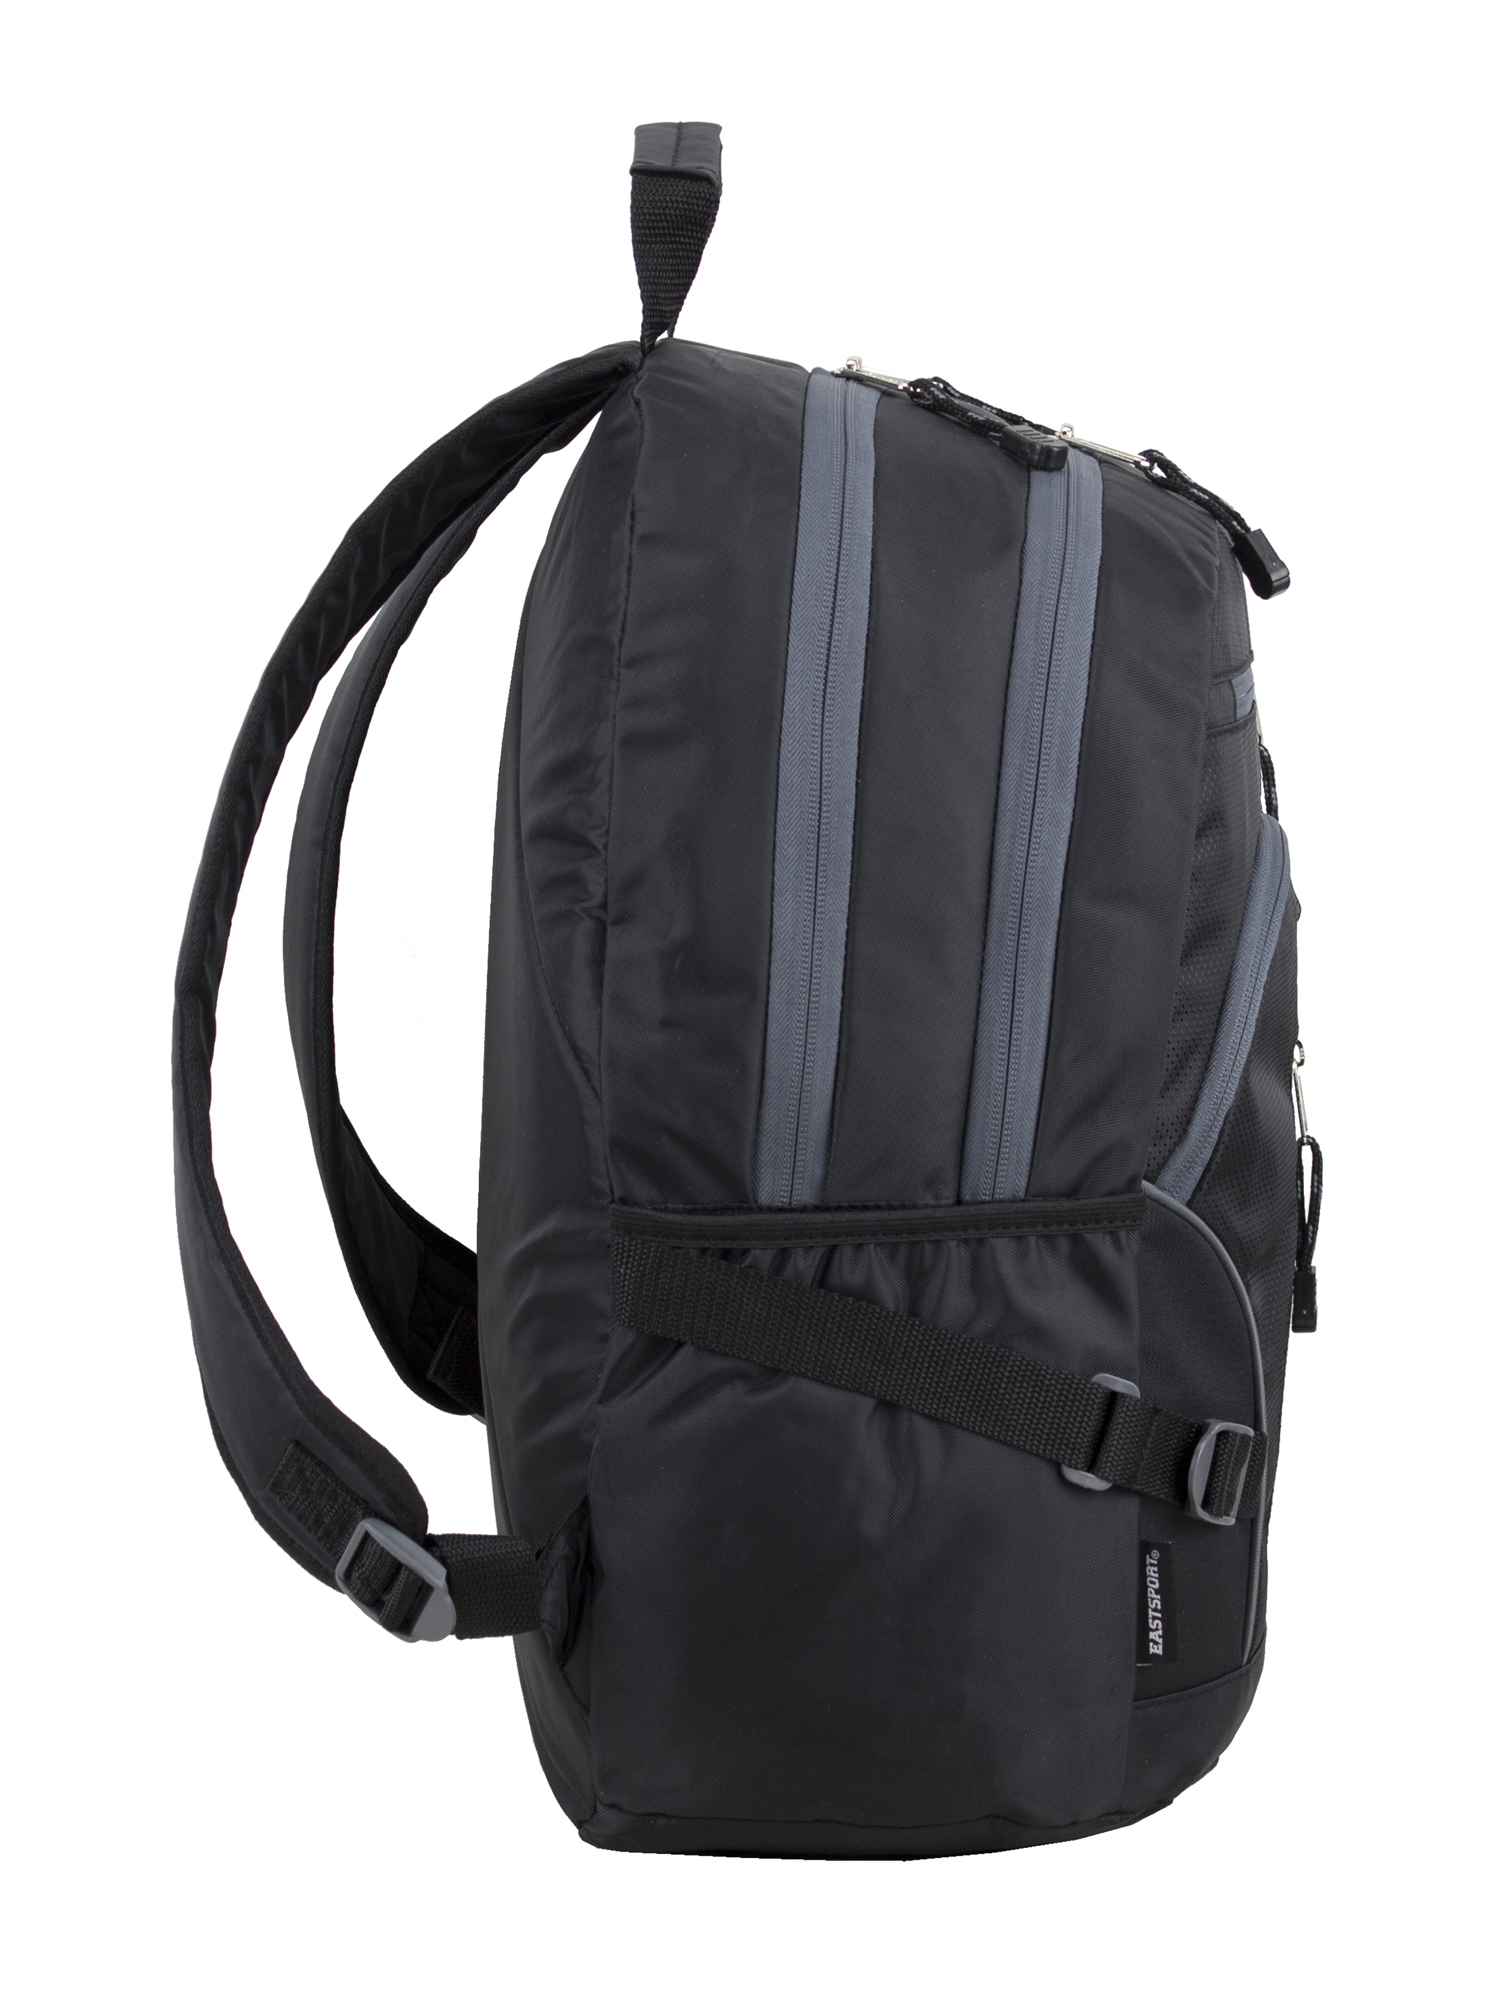 Eastsport Multi-Purpose Dynamic School Black Backpack - image 5 of 6